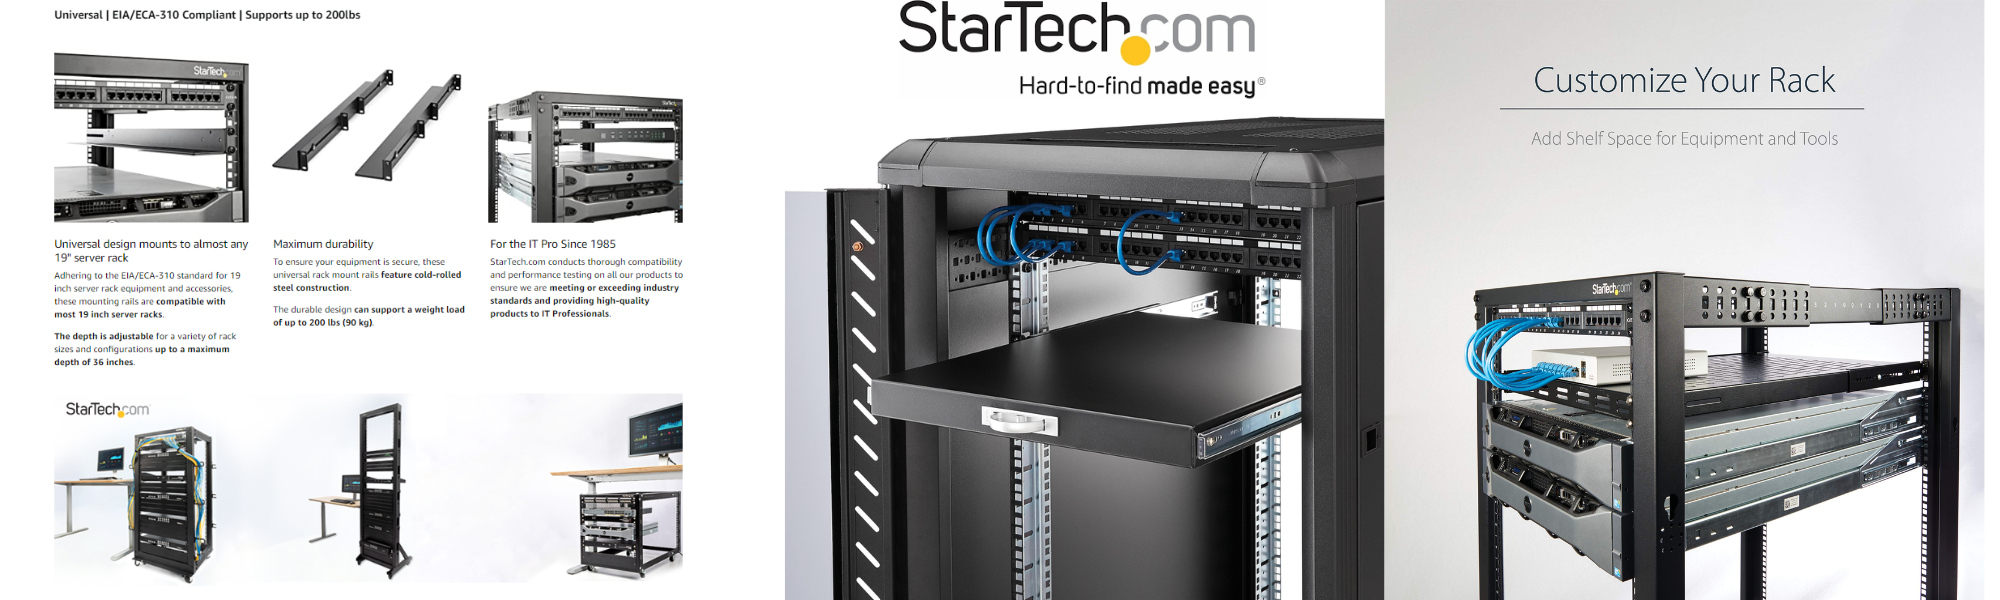 Startech Server Rack Accessories: Elevate Your IT Infrastructure